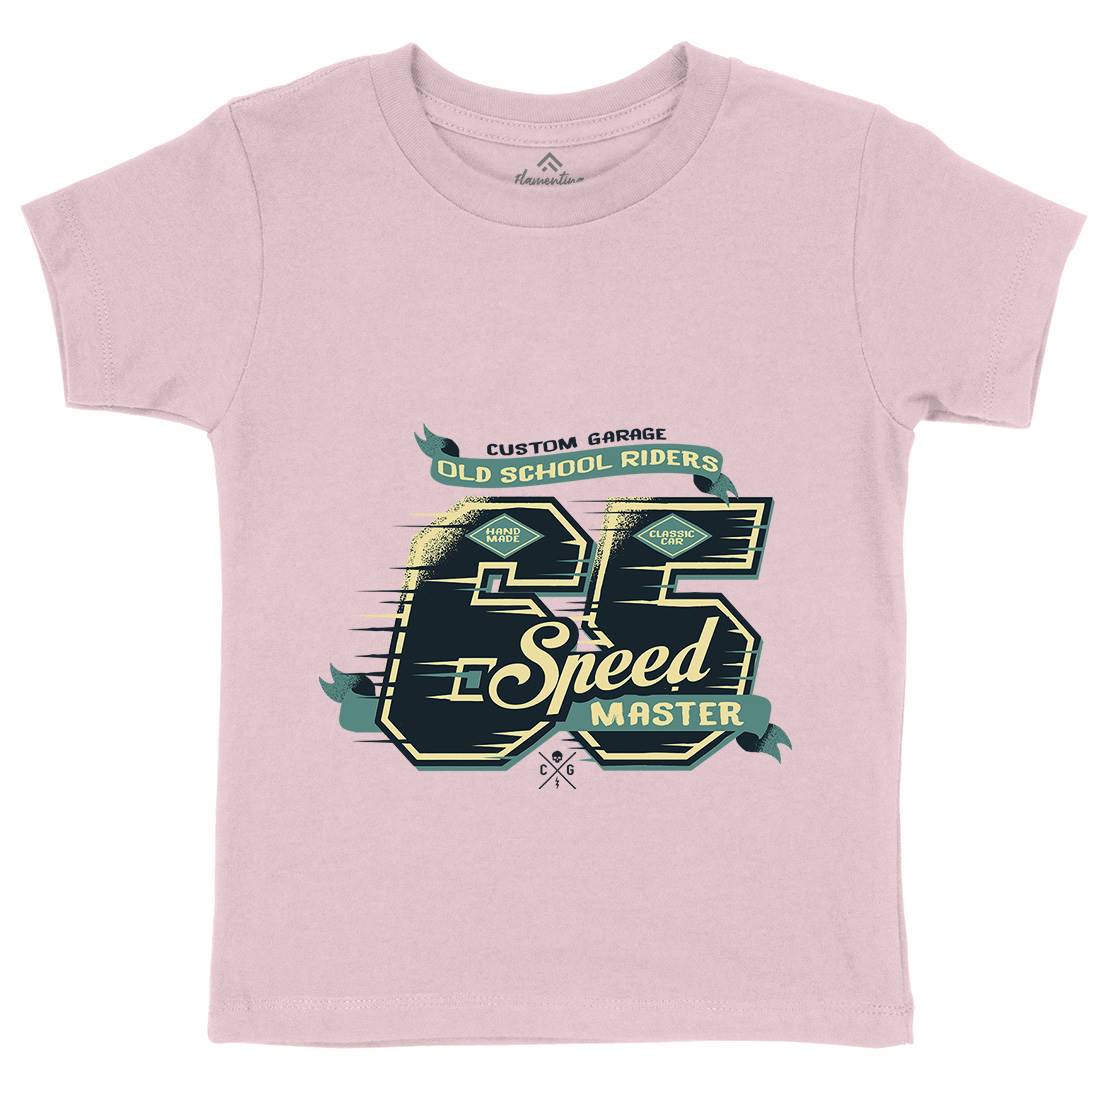 65 Speed Kids Crew Neck T-Shirt Motorcycles A982